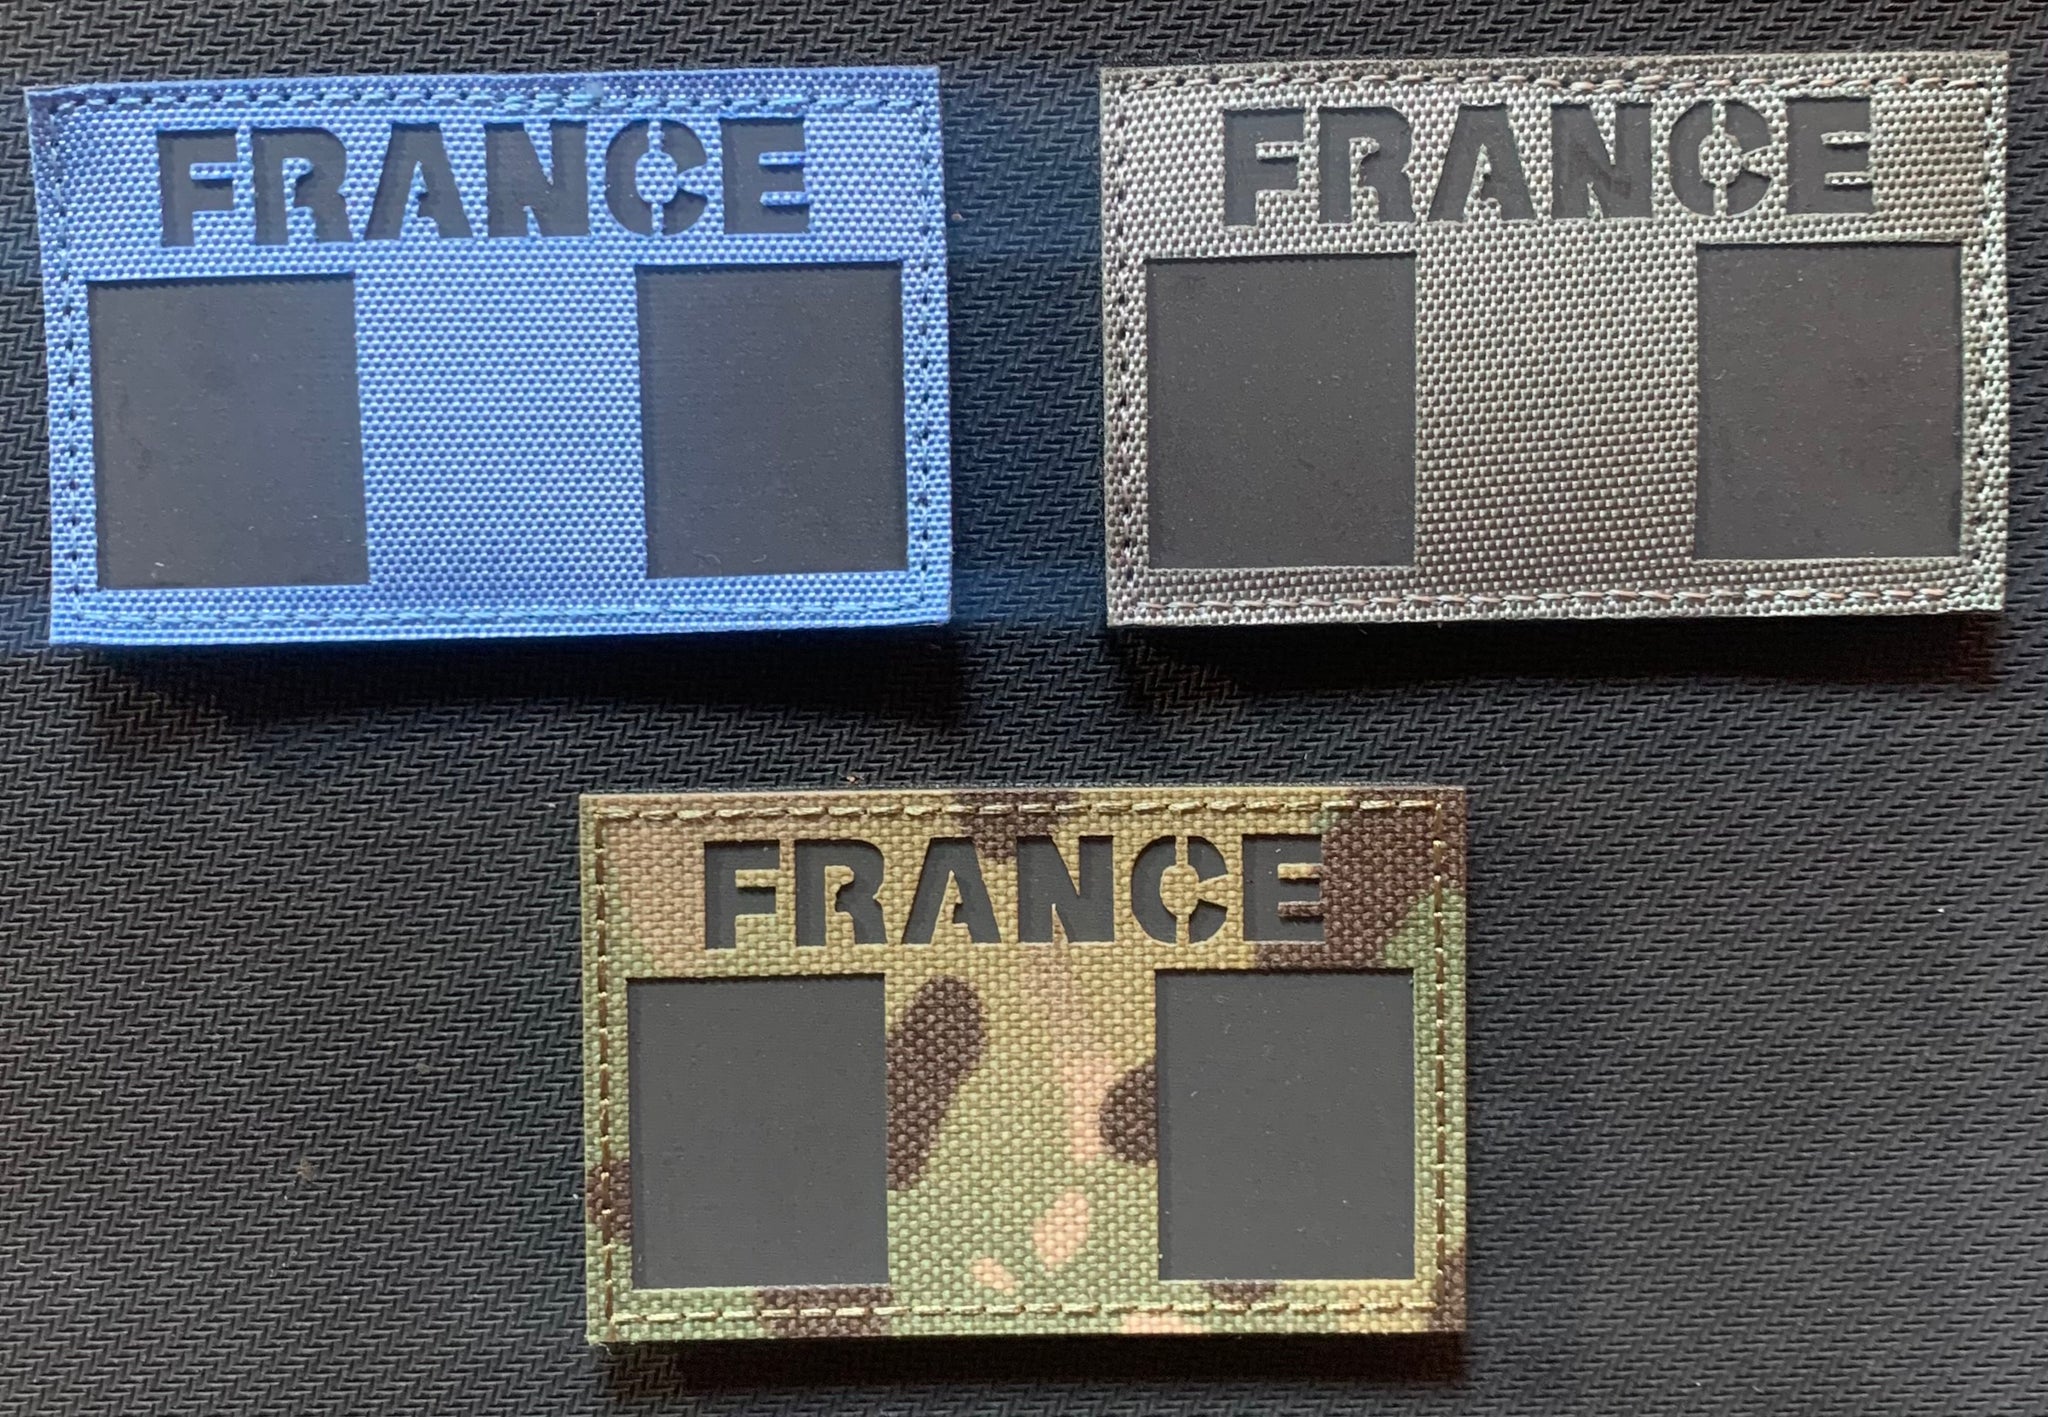 InfantryPro PATCH Militaire France Infrarouge Camo Ecusson France